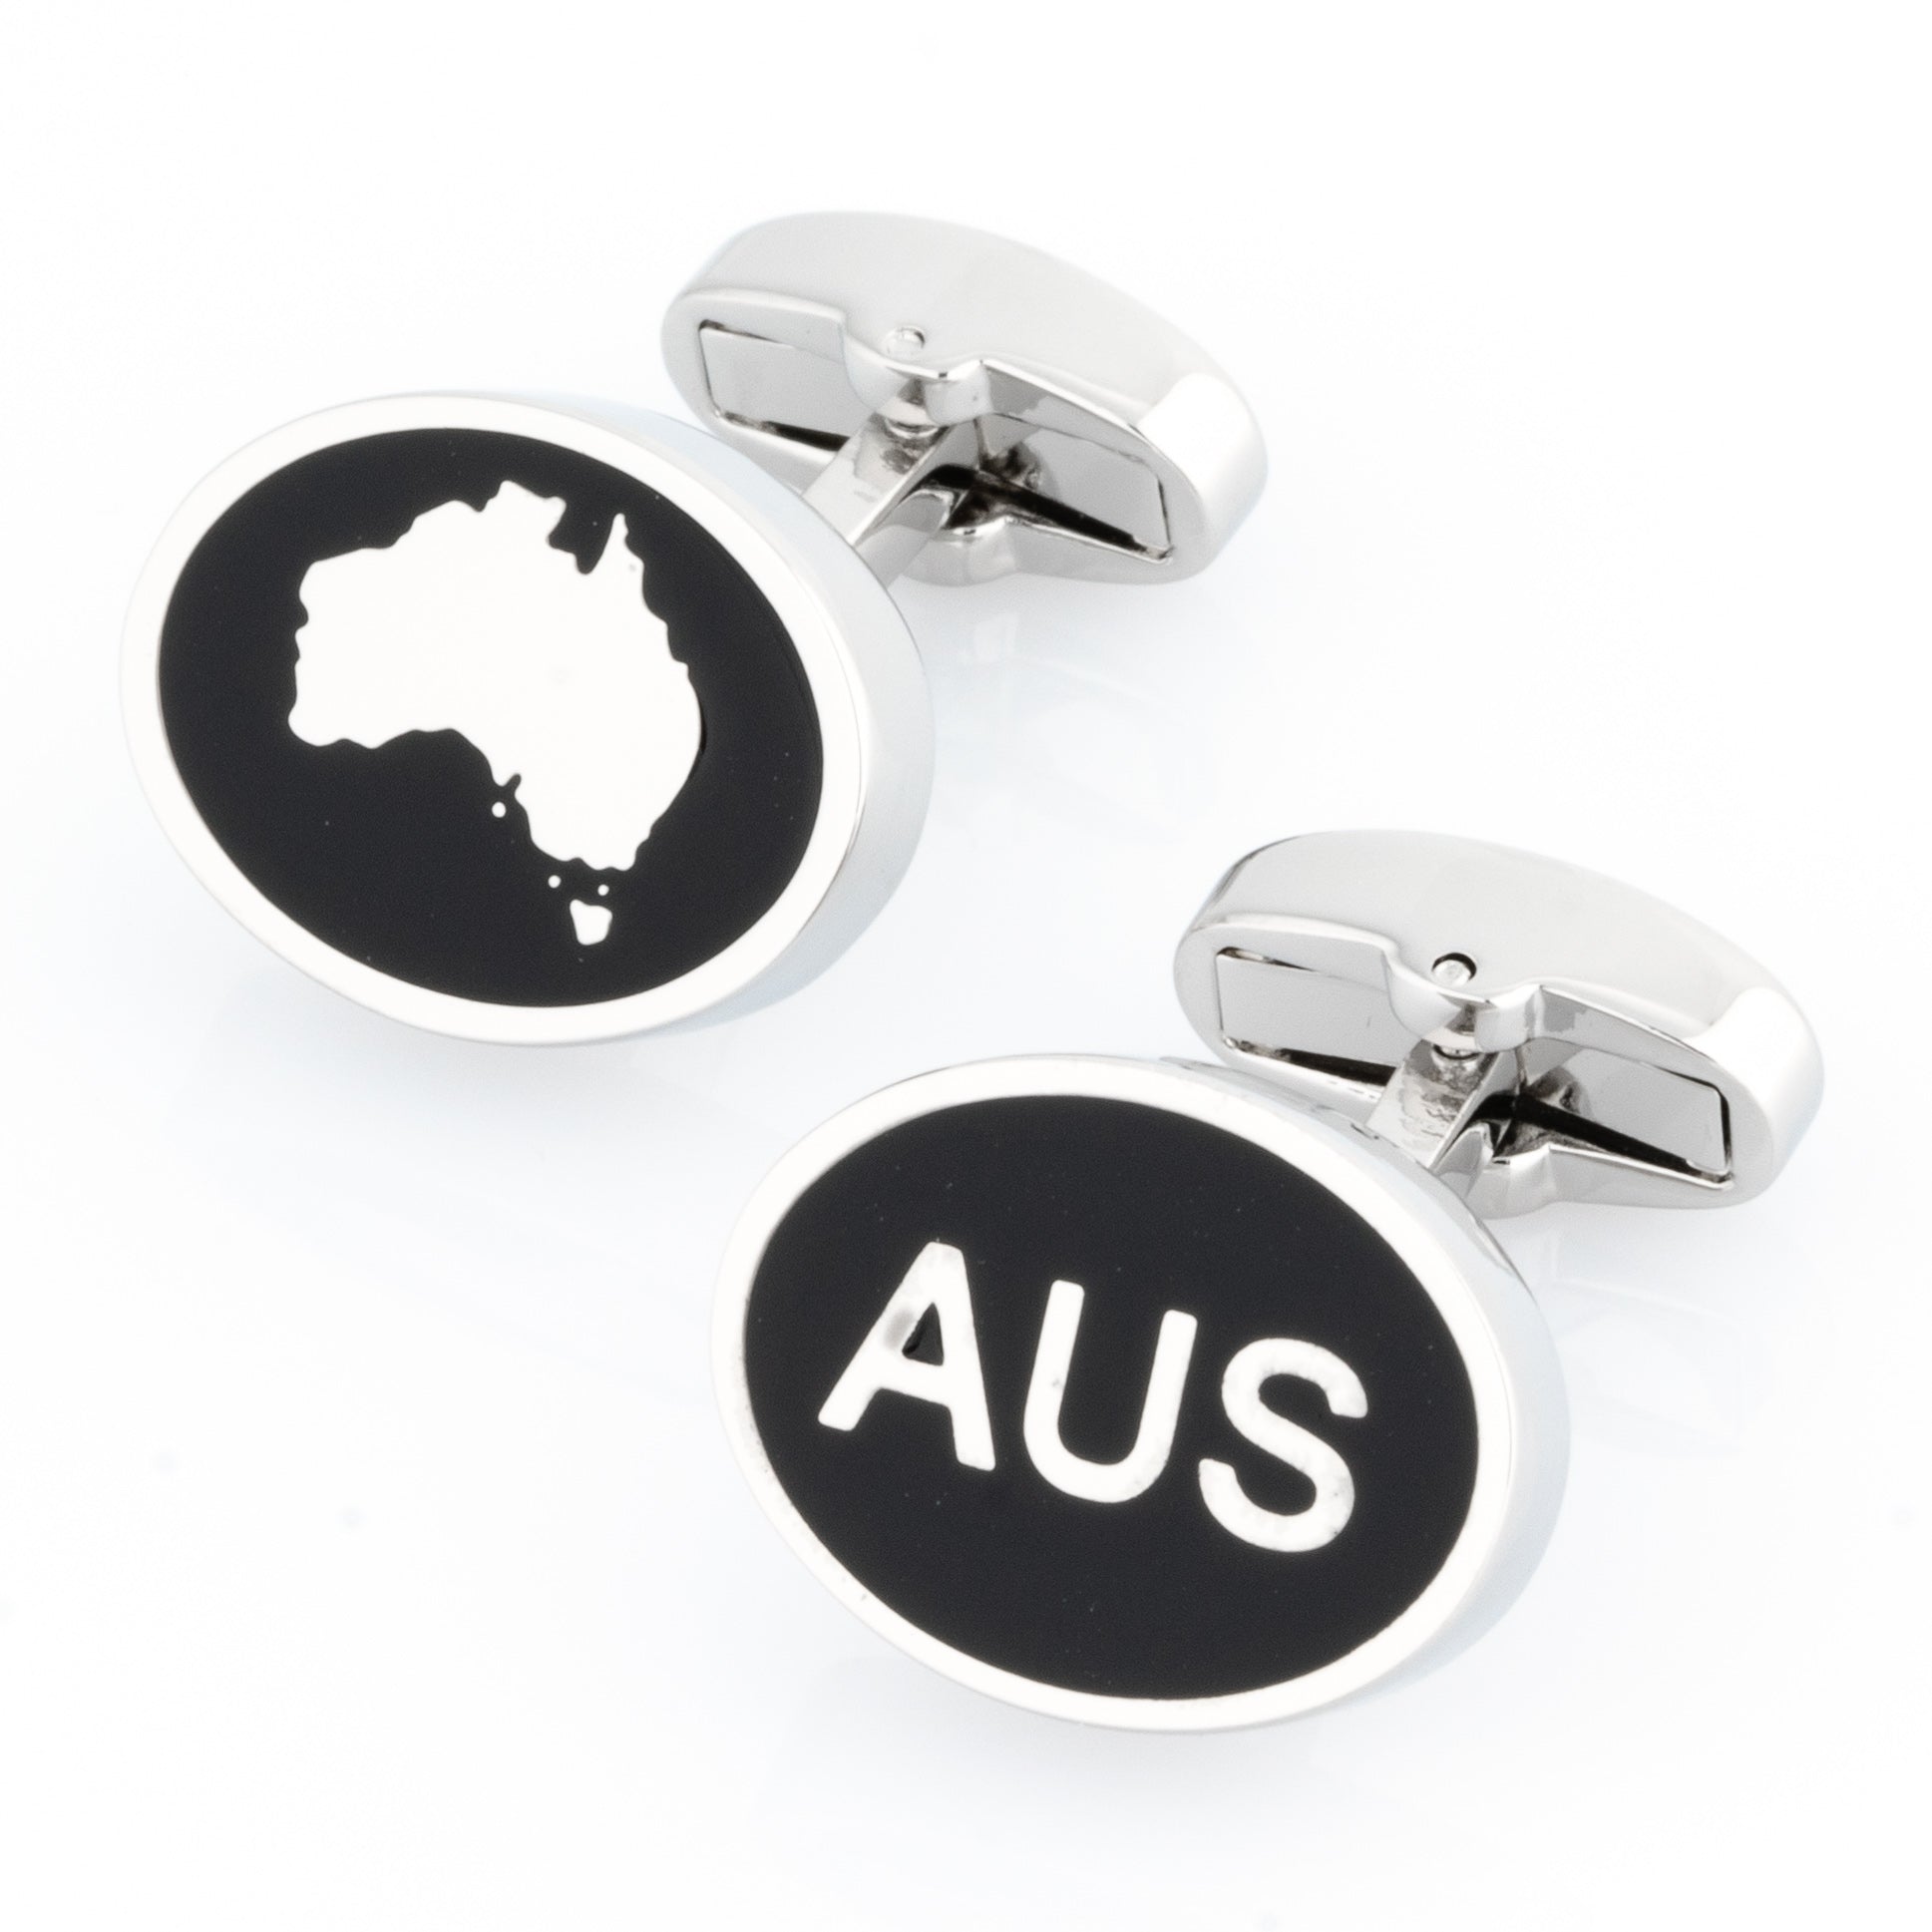 Australian Map and AUS Cufflinks, Novelty Cufflinks, CL8505, Mens Cufflinks, Cufflinks, Cuffed, Clinks, Clinks Australia 